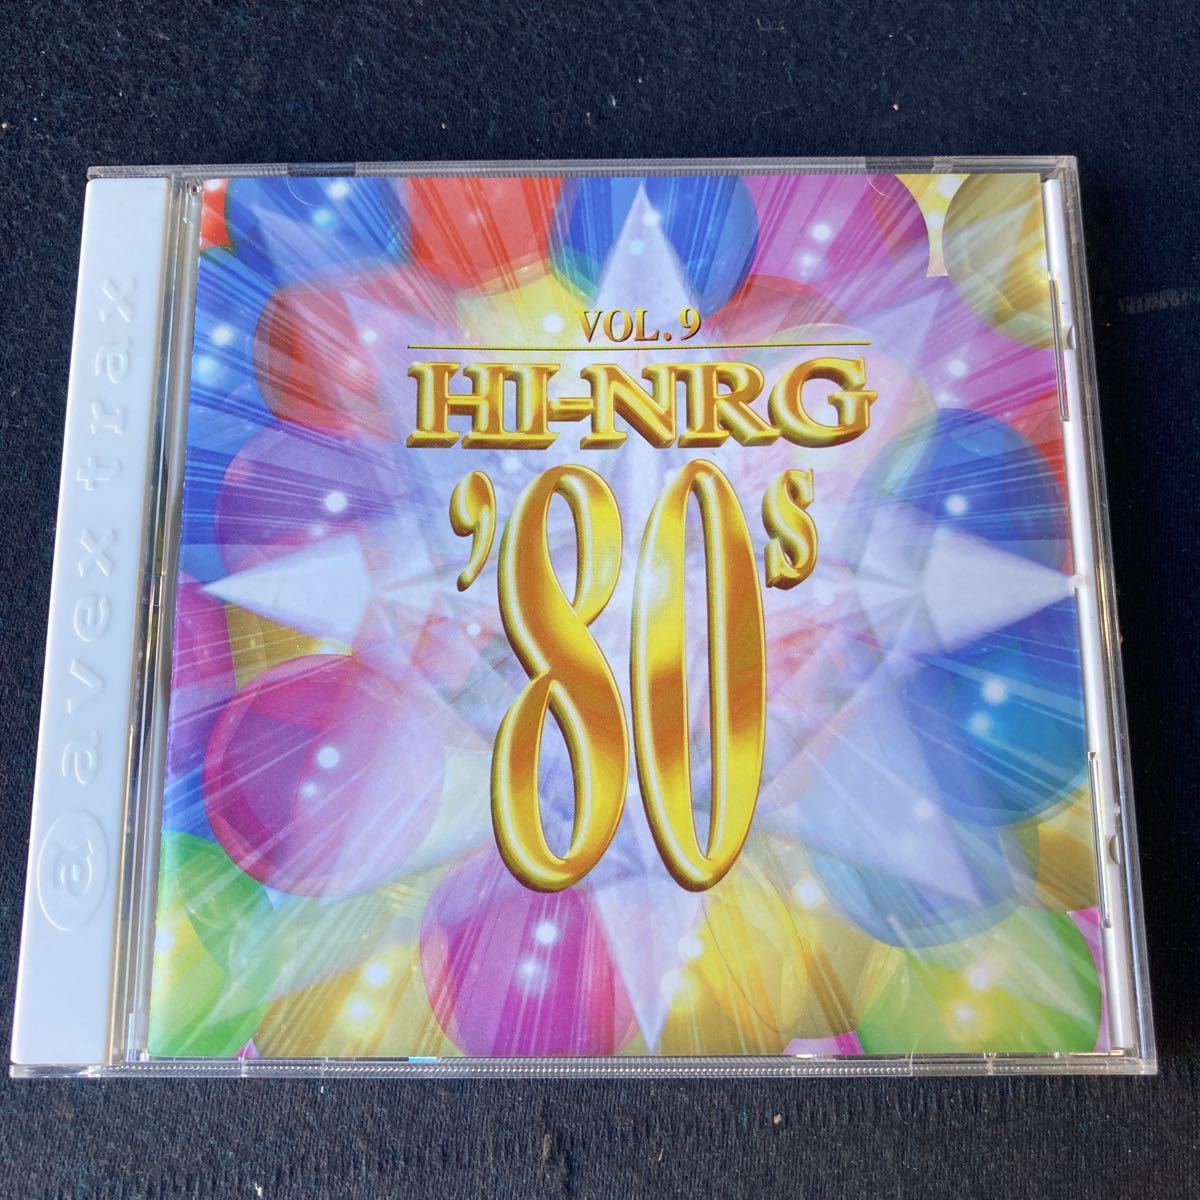 Yahoo!オークション -「hi-nrg 80s」(CD) の落札相場・落札価格